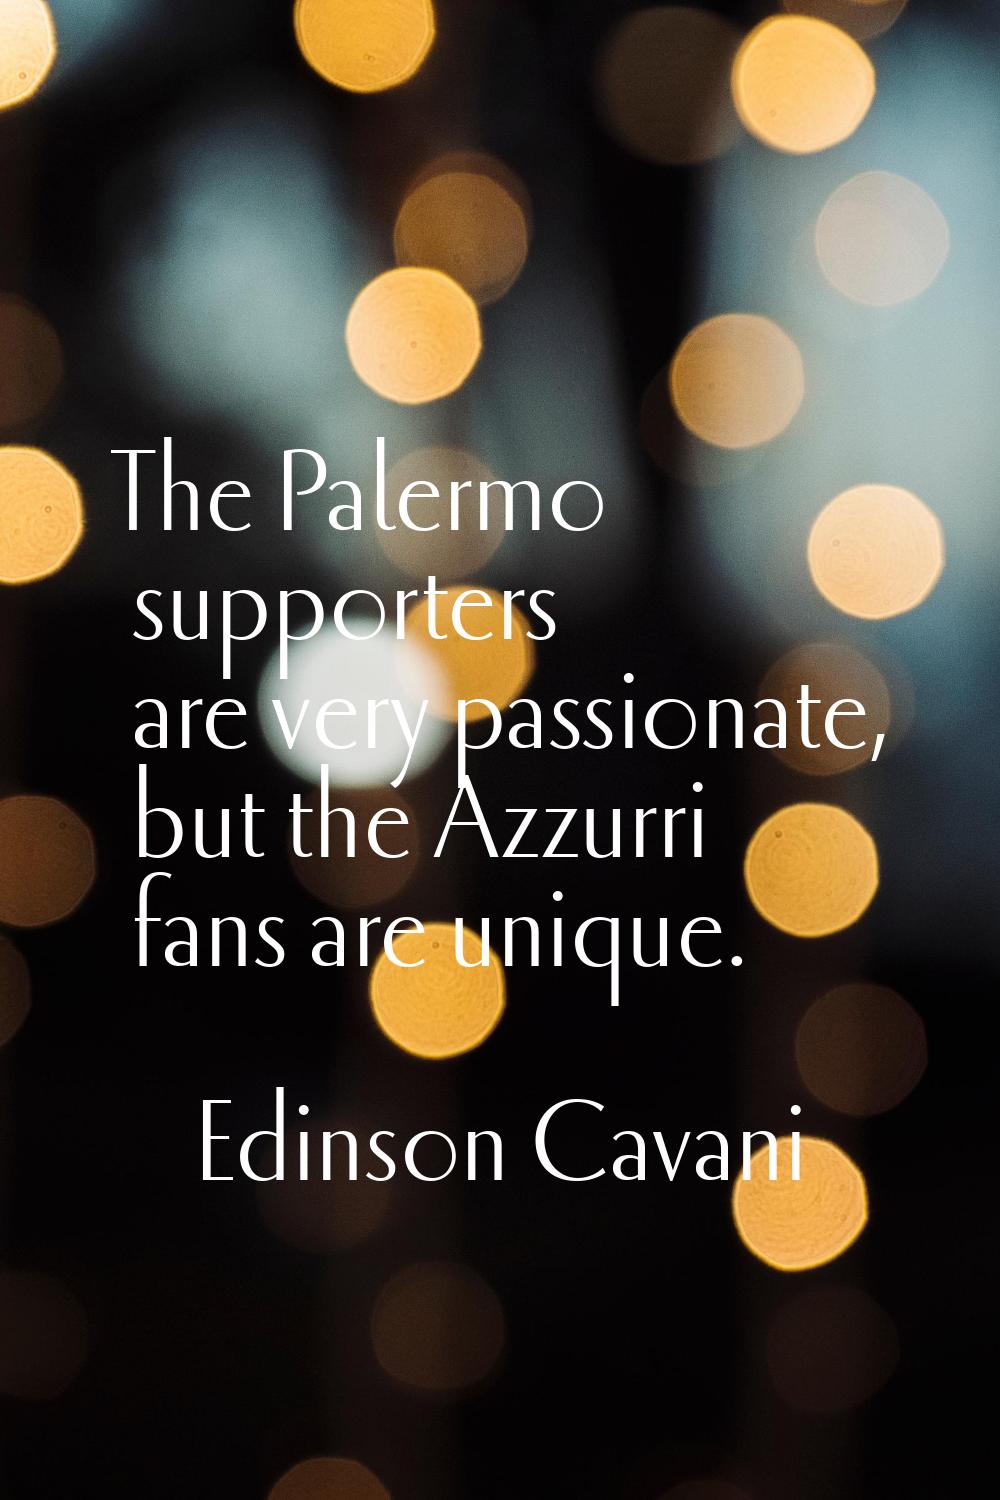 The Palermo supporters are very passionate, but the Azzurri fans are unique.